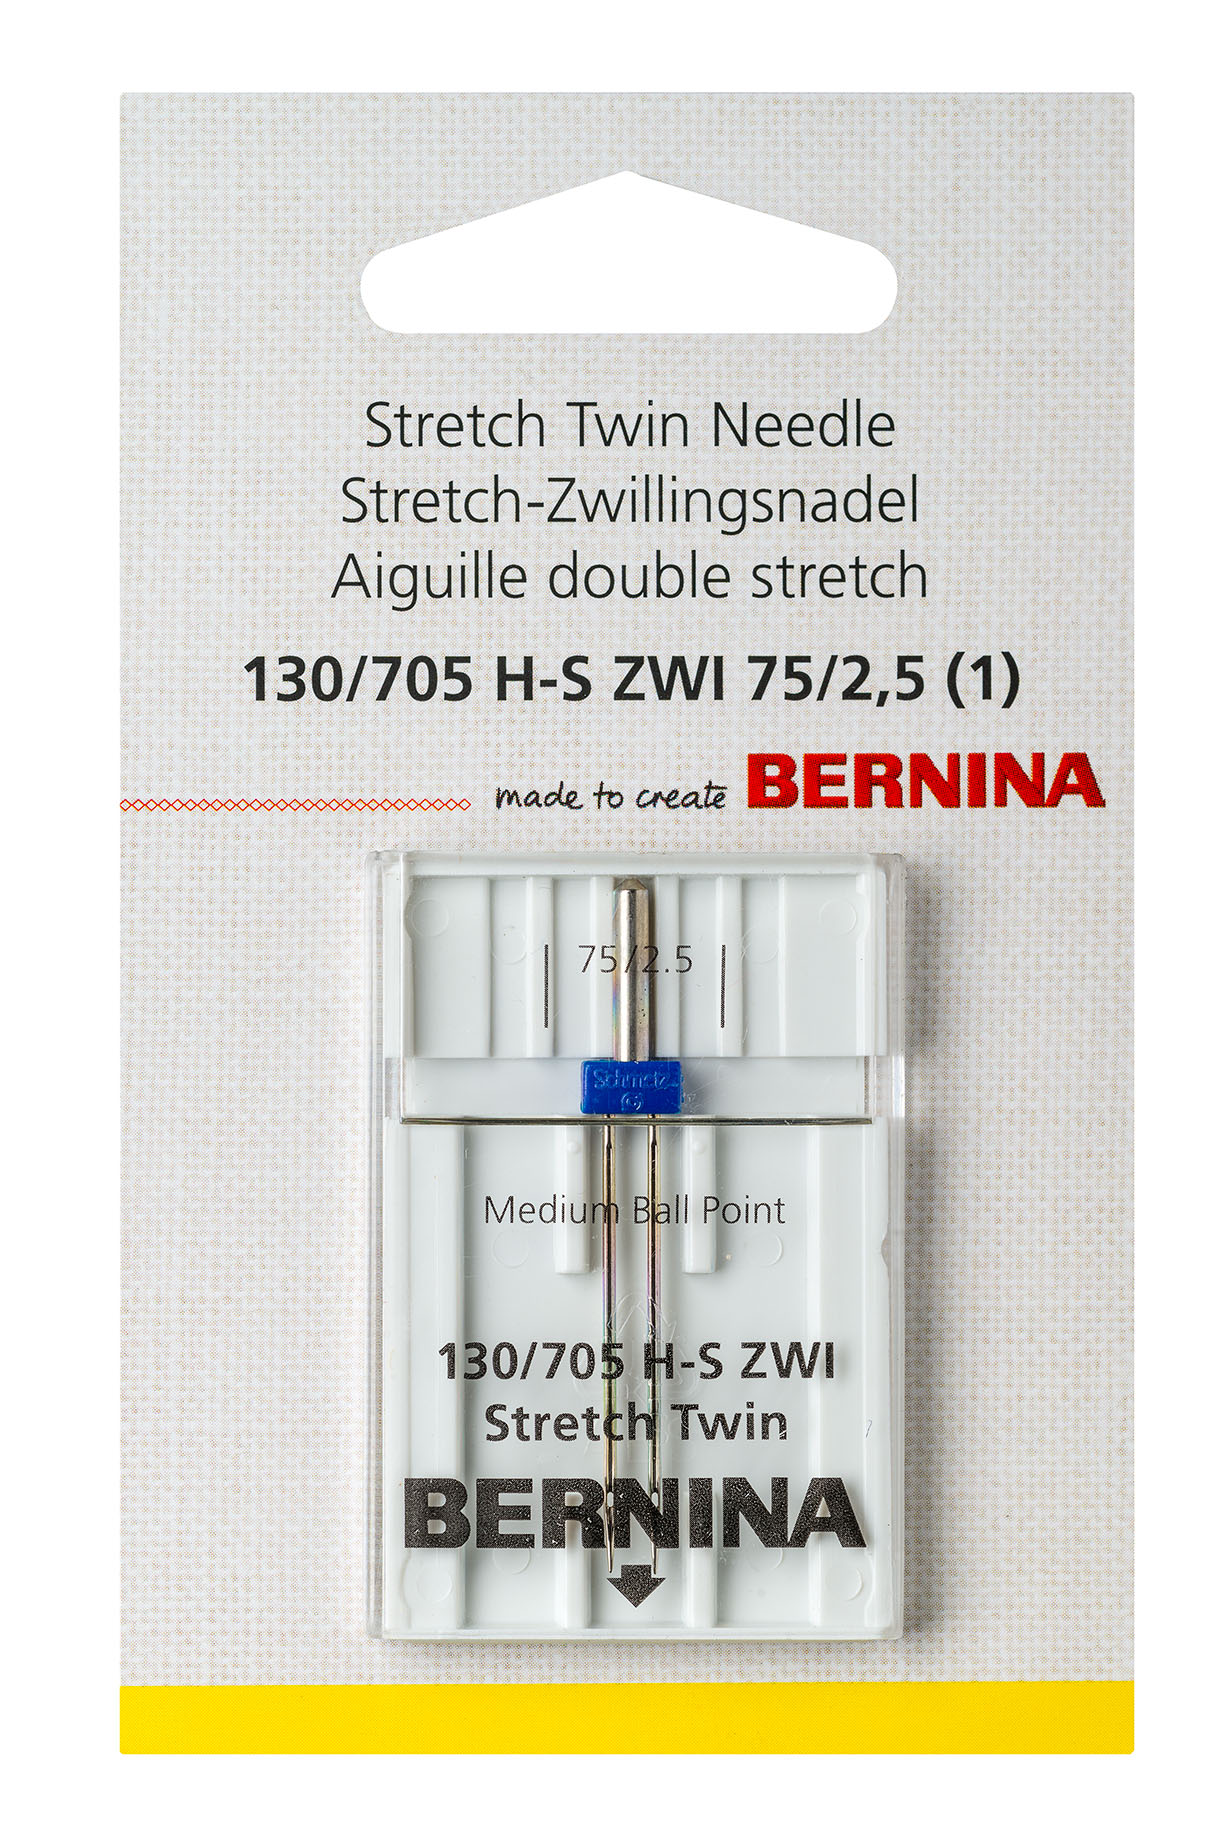 Stretch twin needle